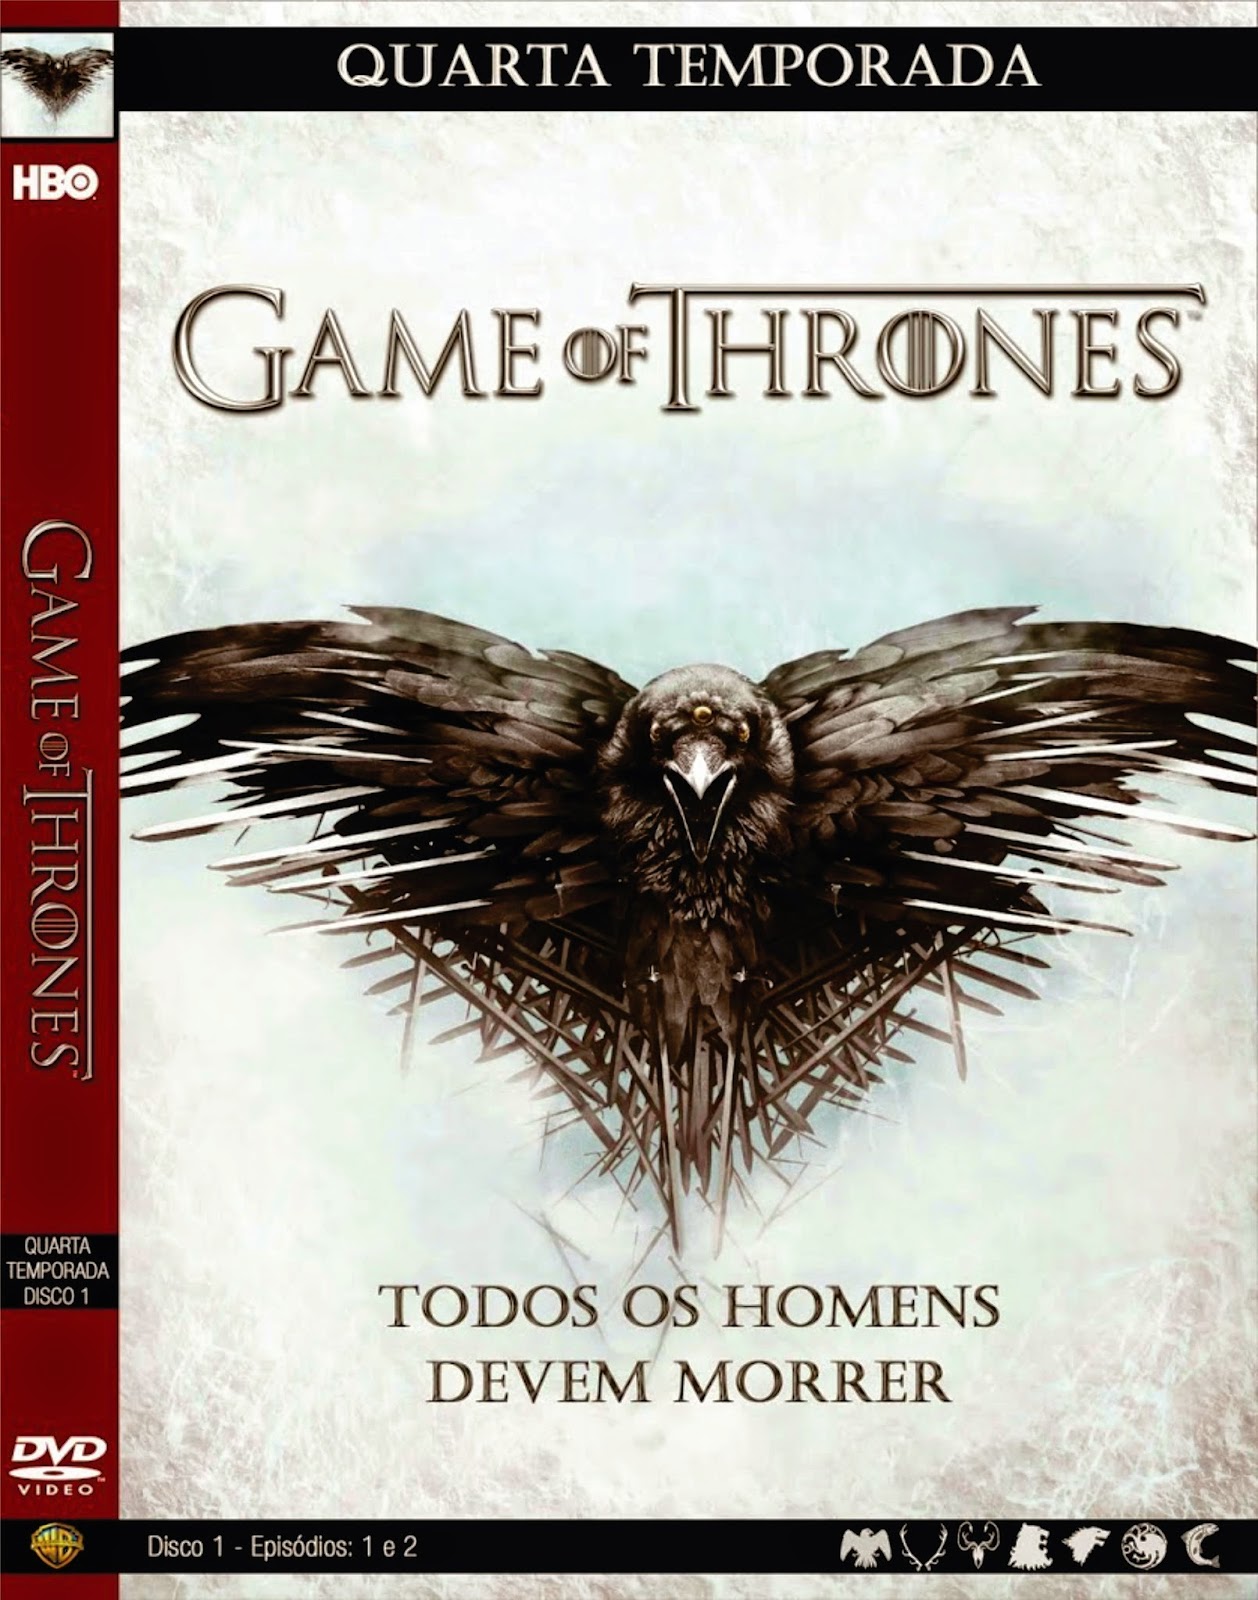 Download game of thrones 2 temporada dublado torrent